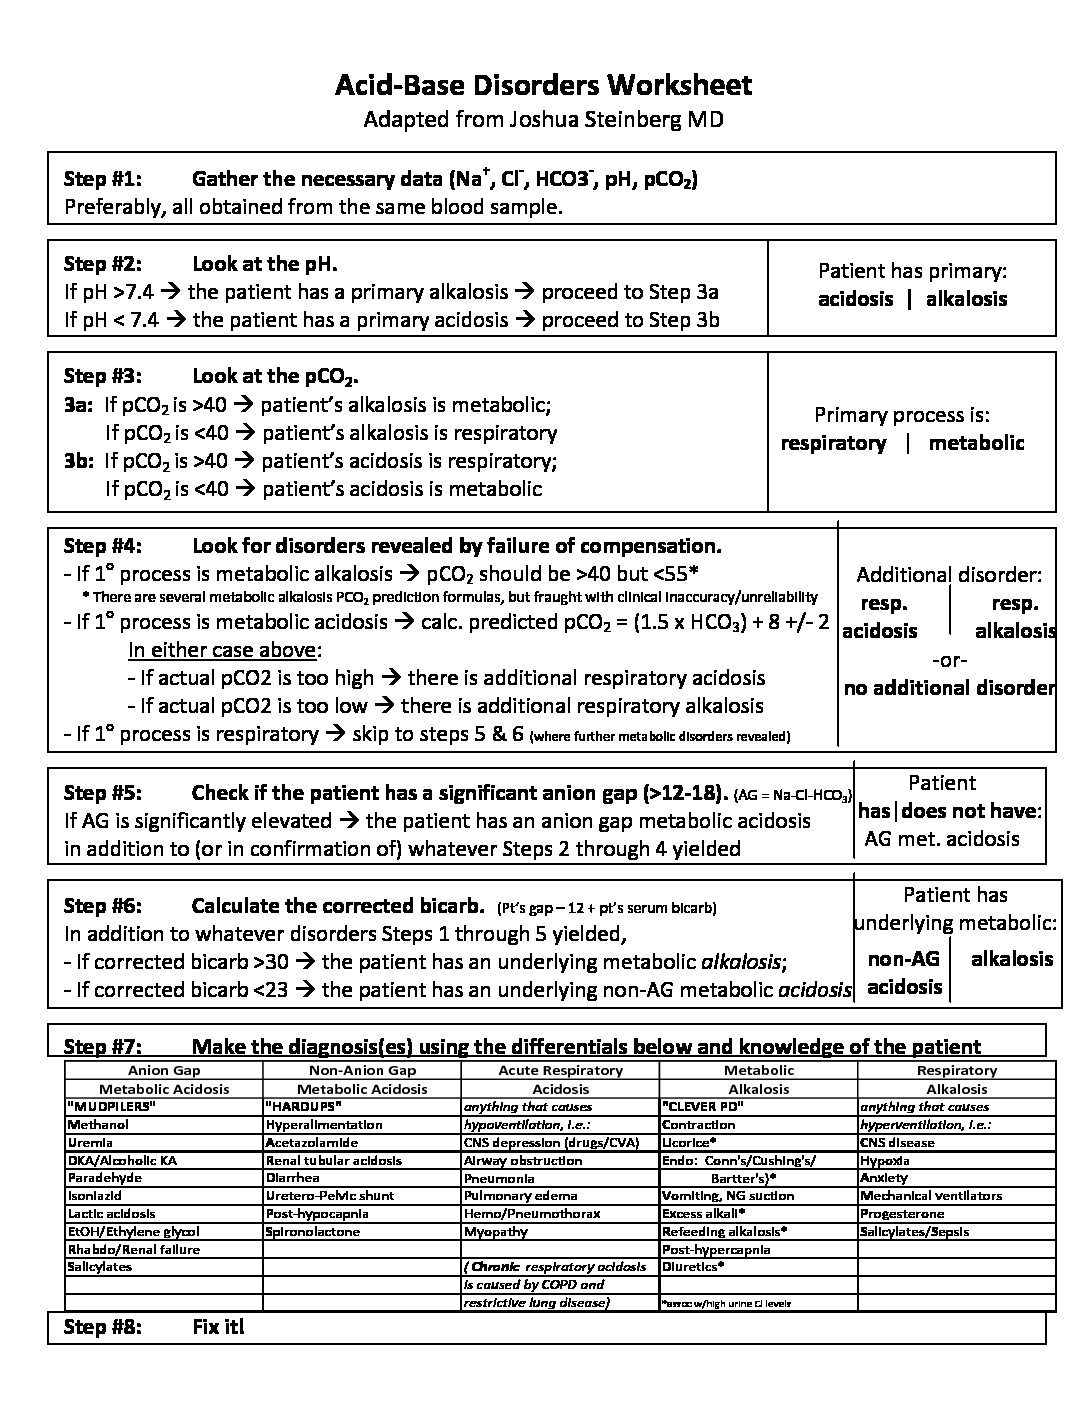 Acid-Base Disorders Worksheet Archives - The Medical Media Review In Acid And Base Worksheet